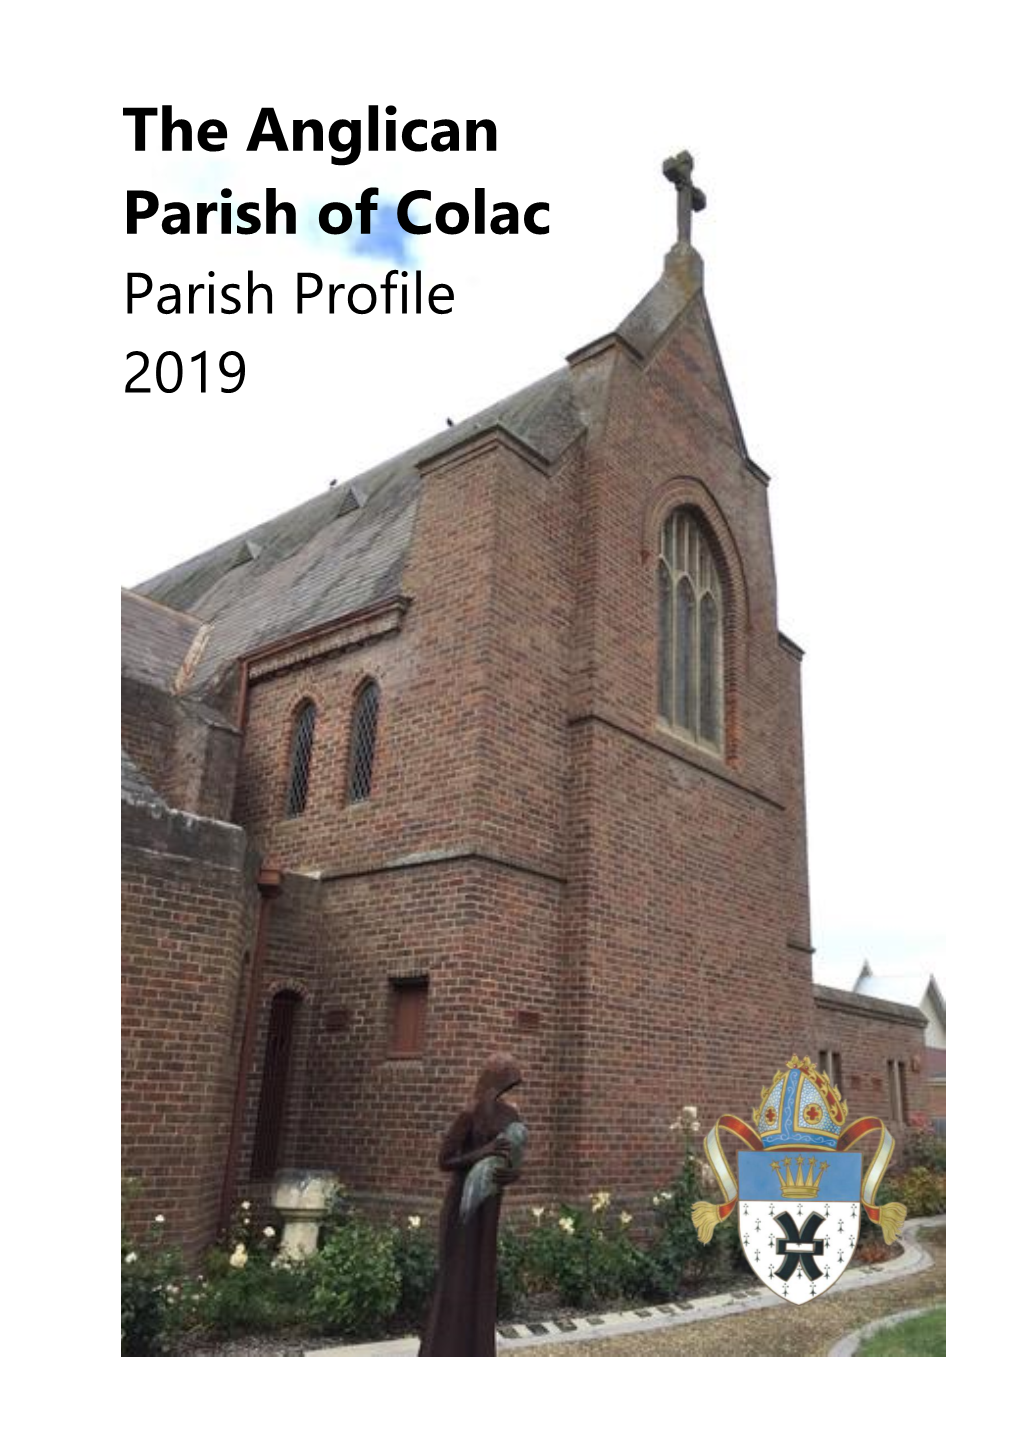 The Anglican Parish of Colac Parish Profile 2019